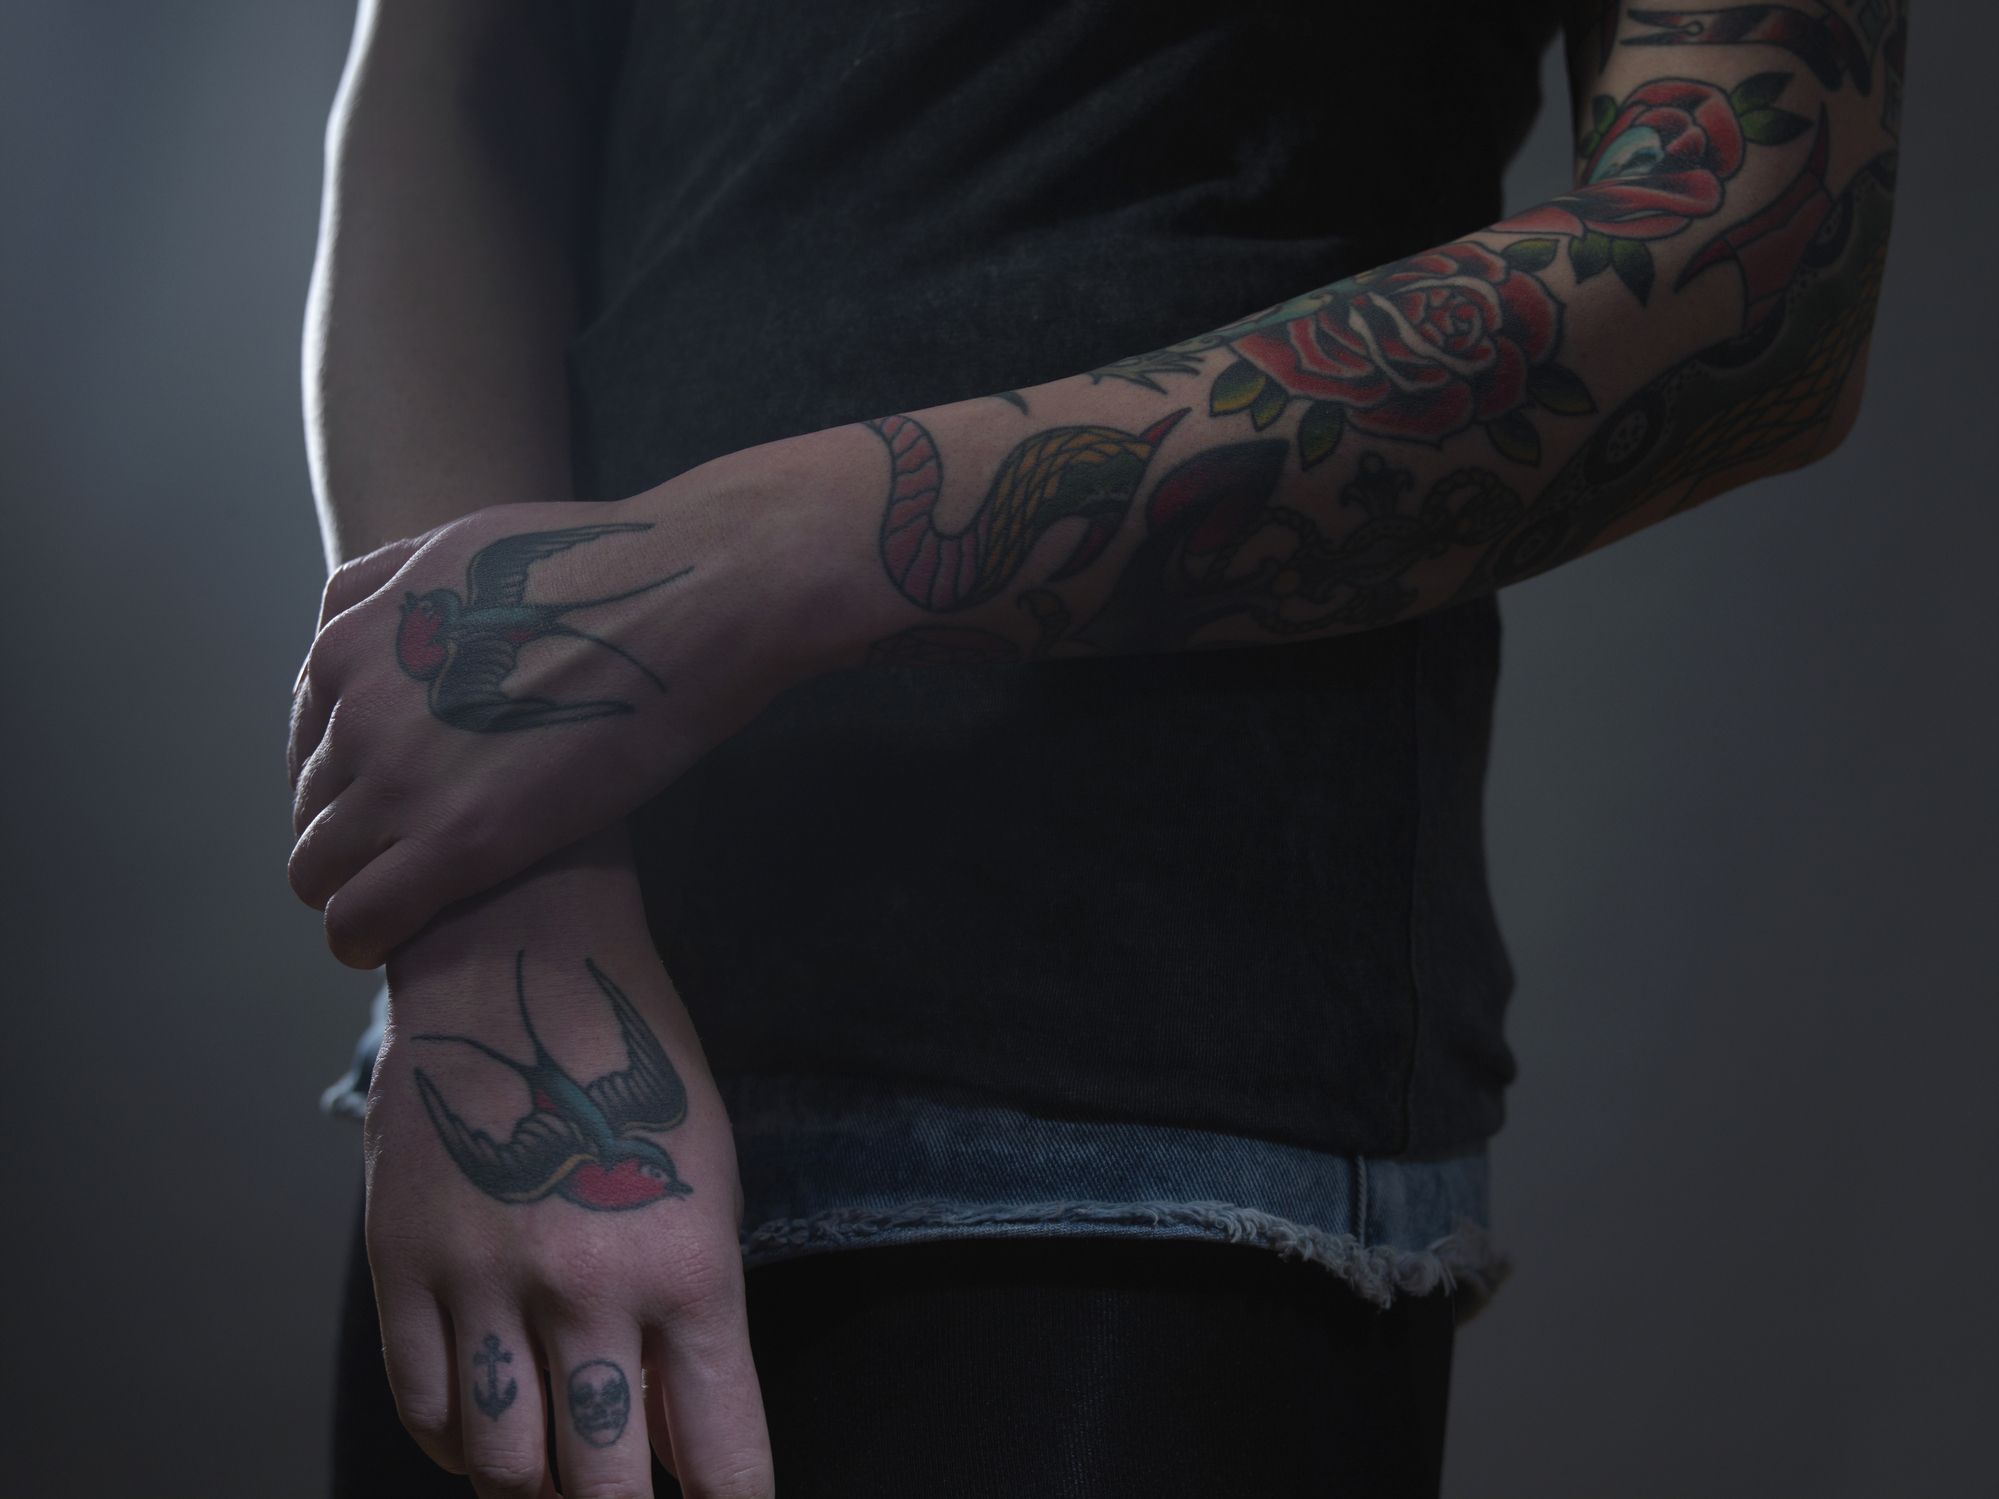 Full leg sleeve tattoo done by  Flash Ink Tattoo Studio  Facebook